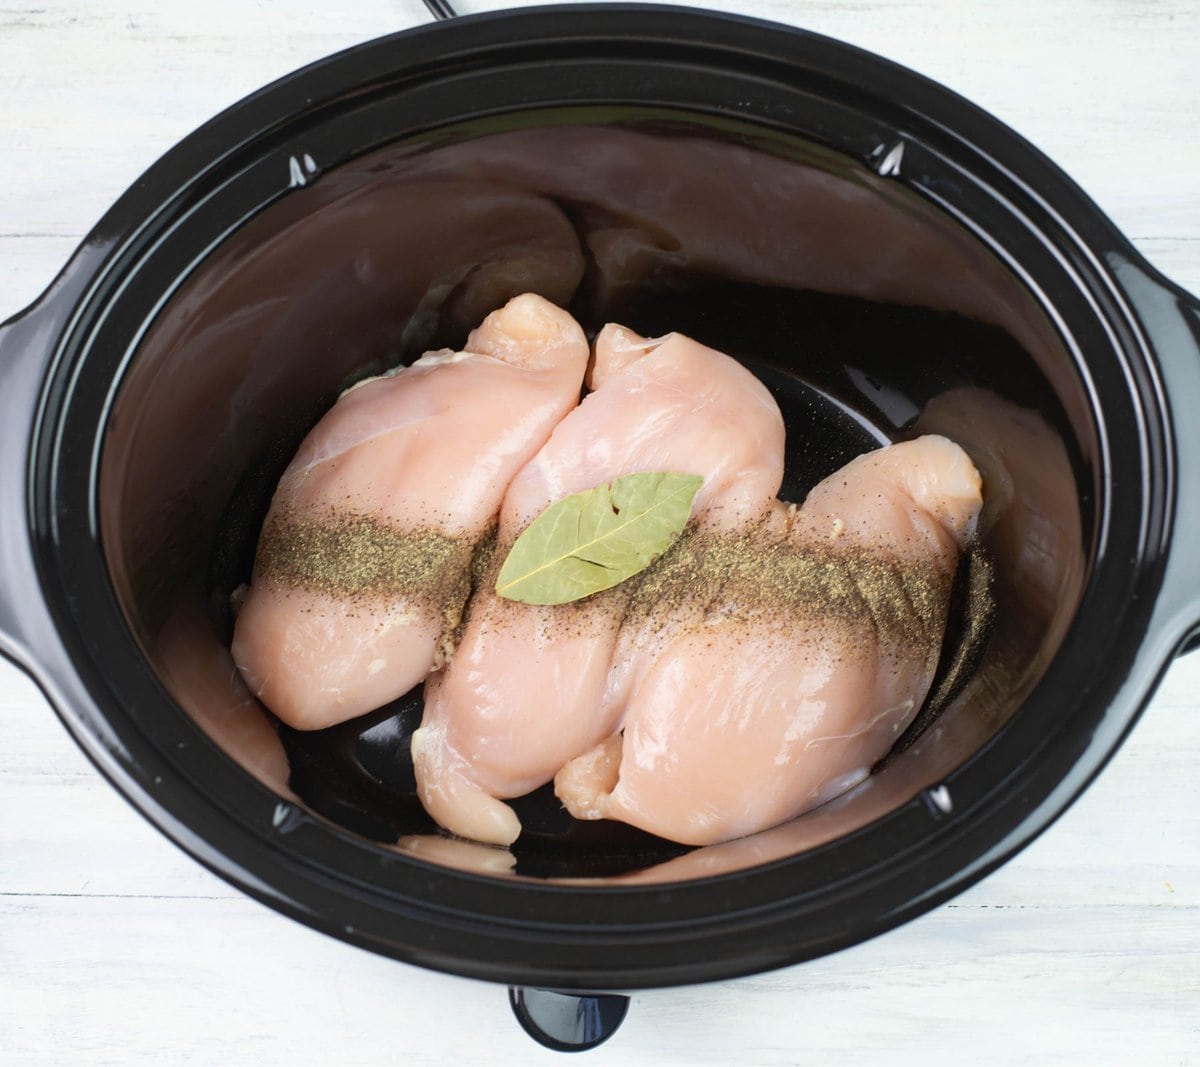 Boneless chicken, salt, pepper and bay leaves in a crock pot.